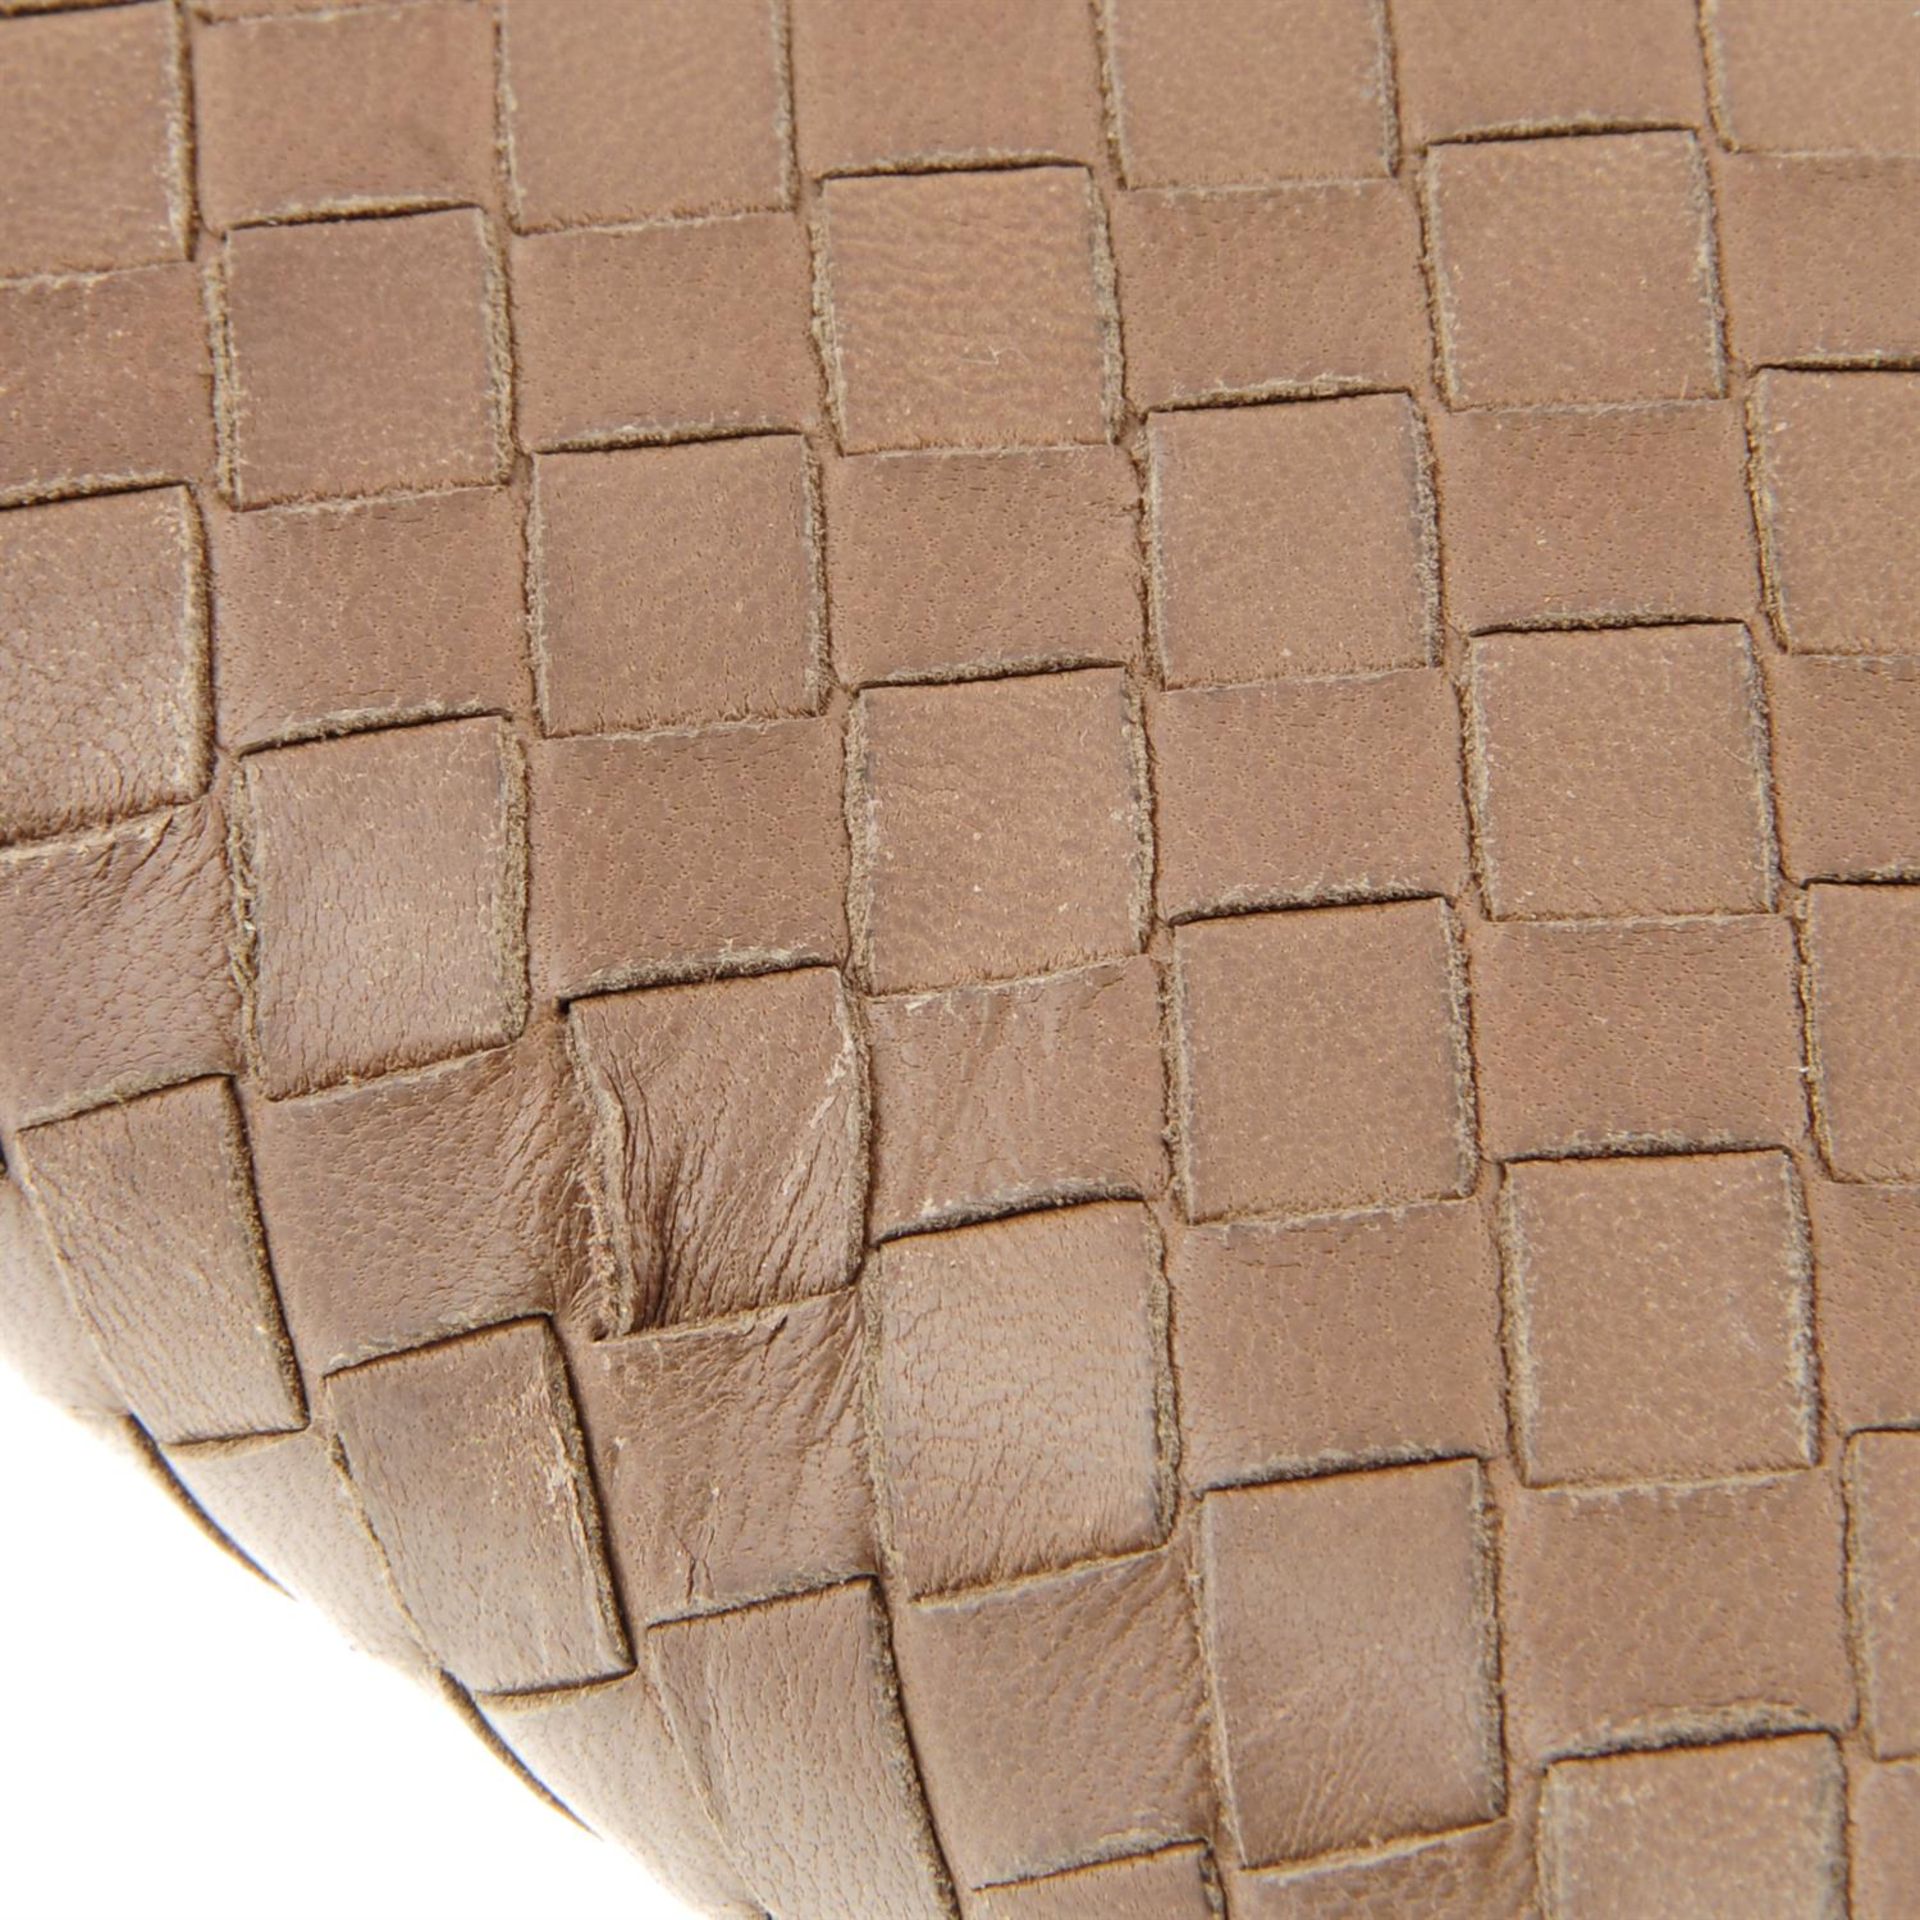 BOTTEGA VENETA - a Intrecciato leather Zippy wallet. - Image 4 of 4